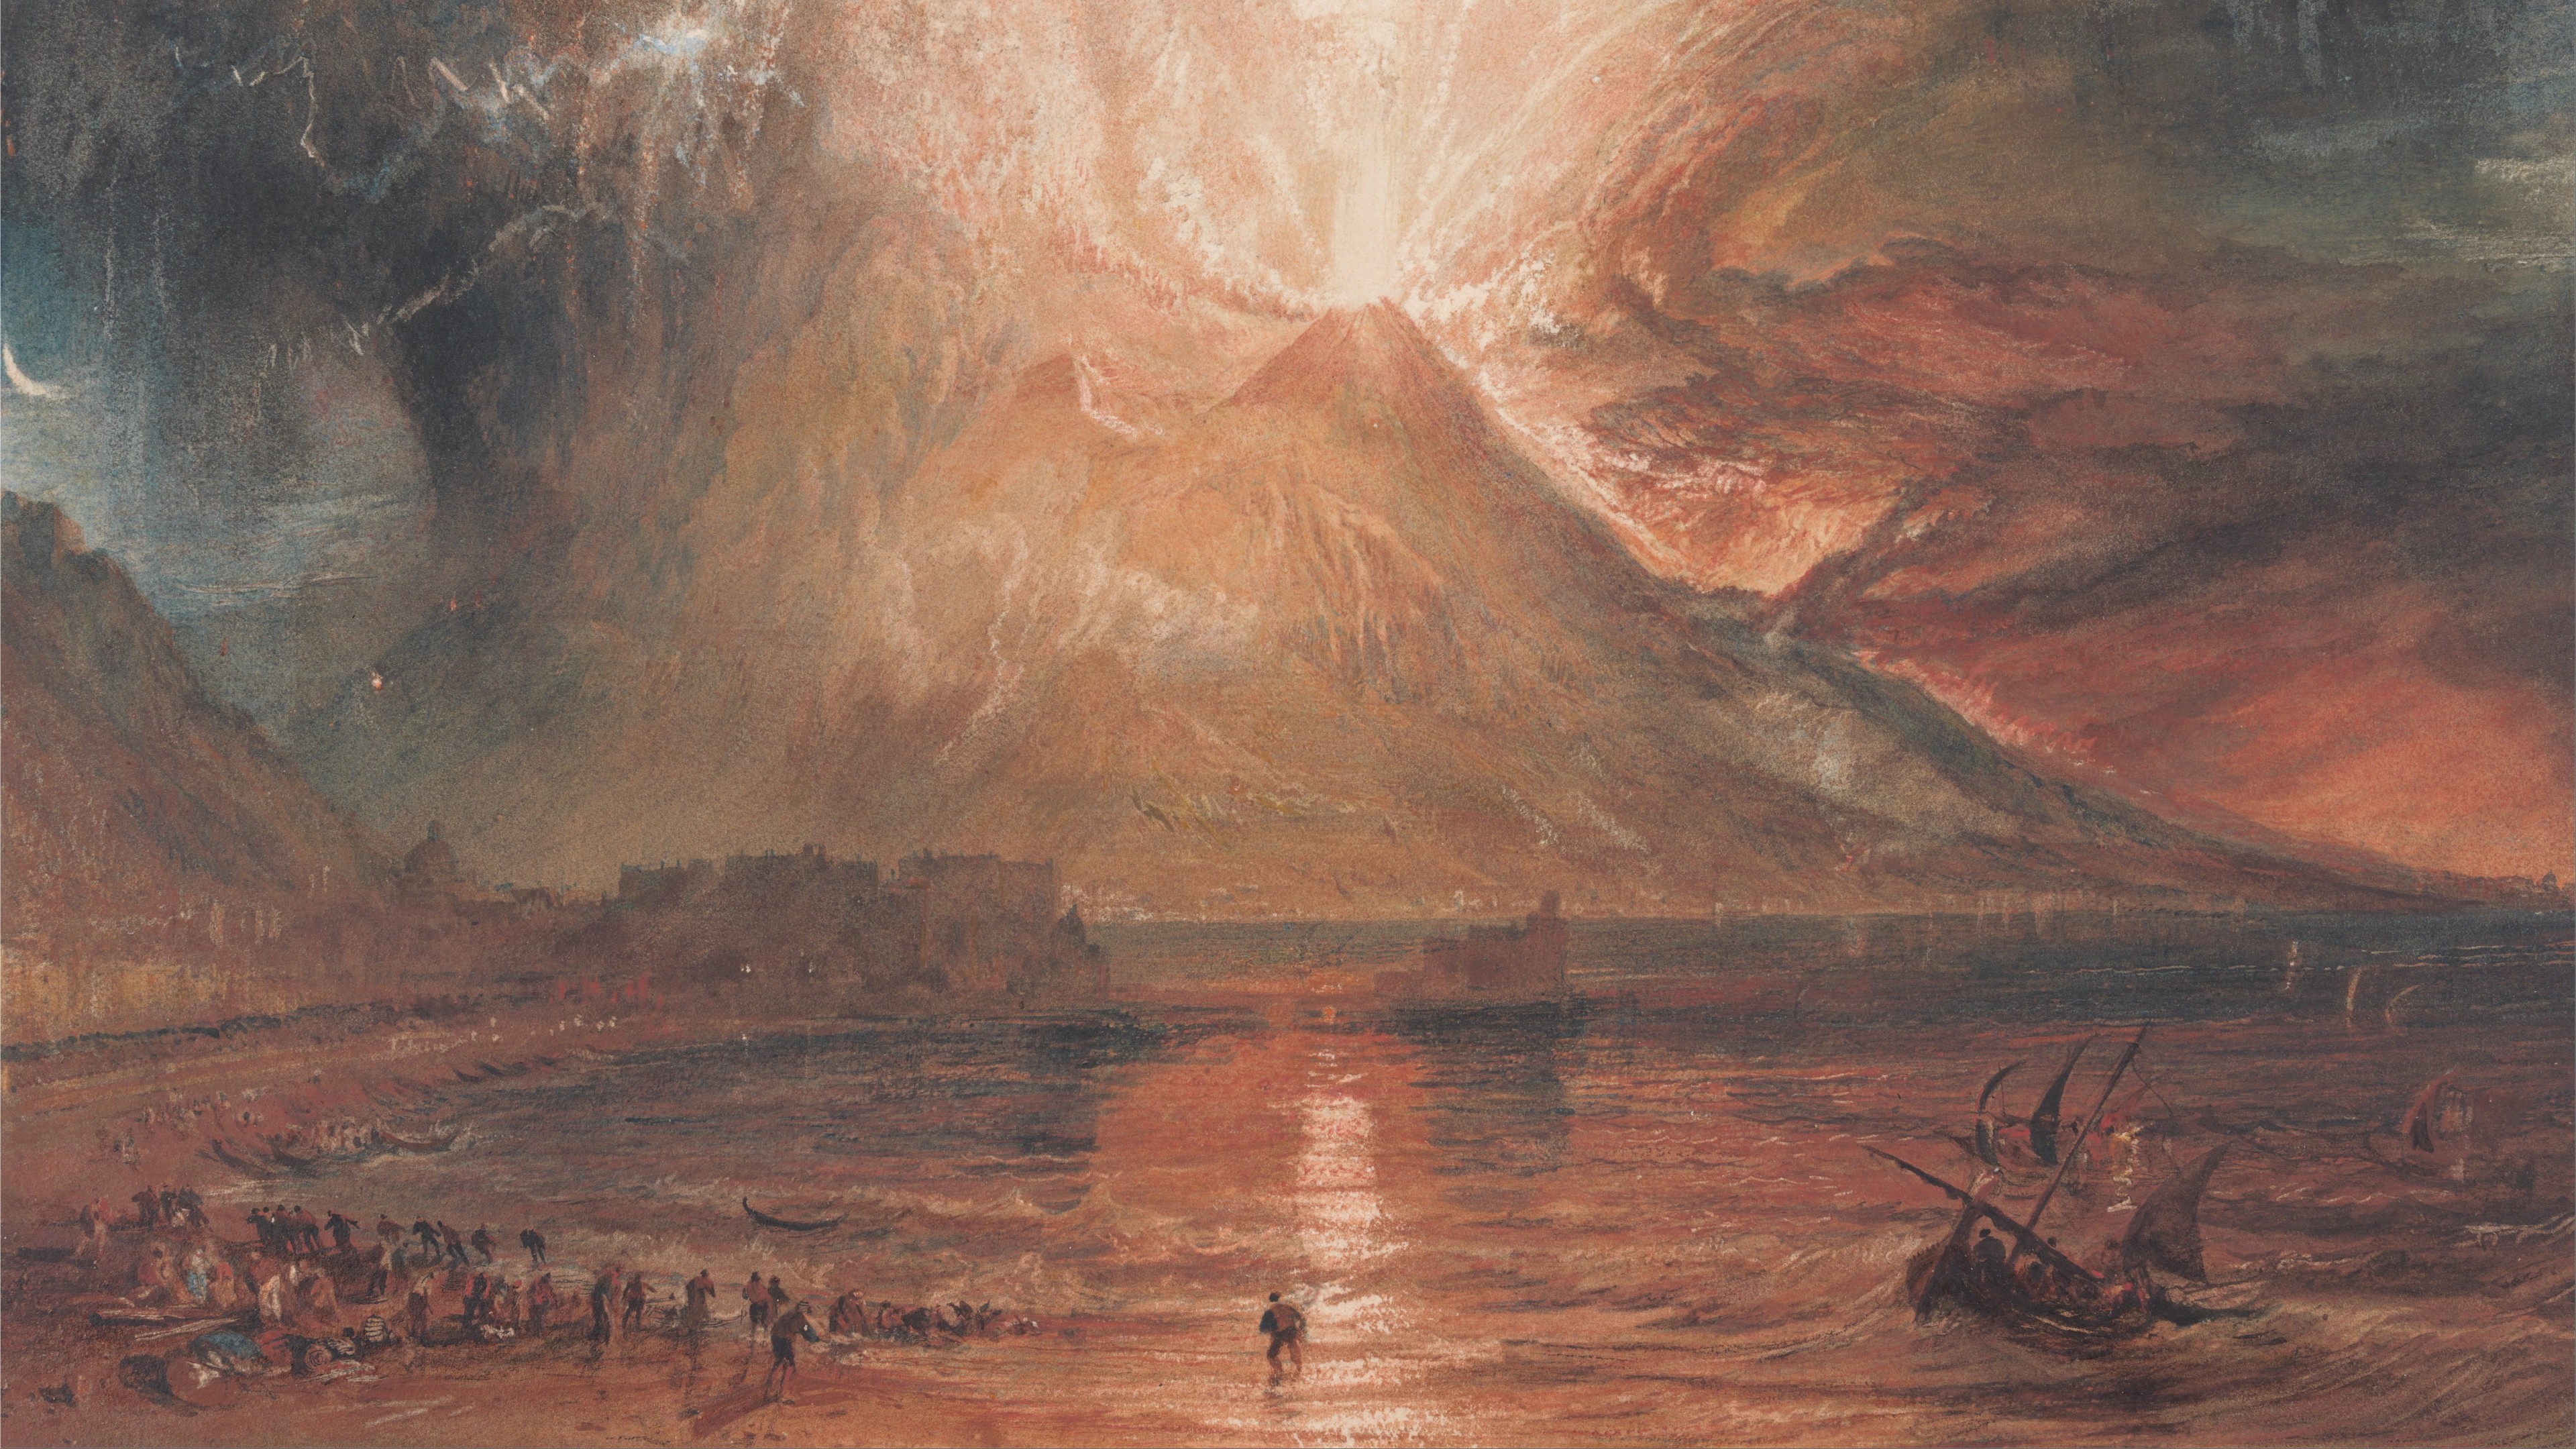 General 3840x2160 painting mountains volcano eruption boat J. M. W. Turner artwork digital art